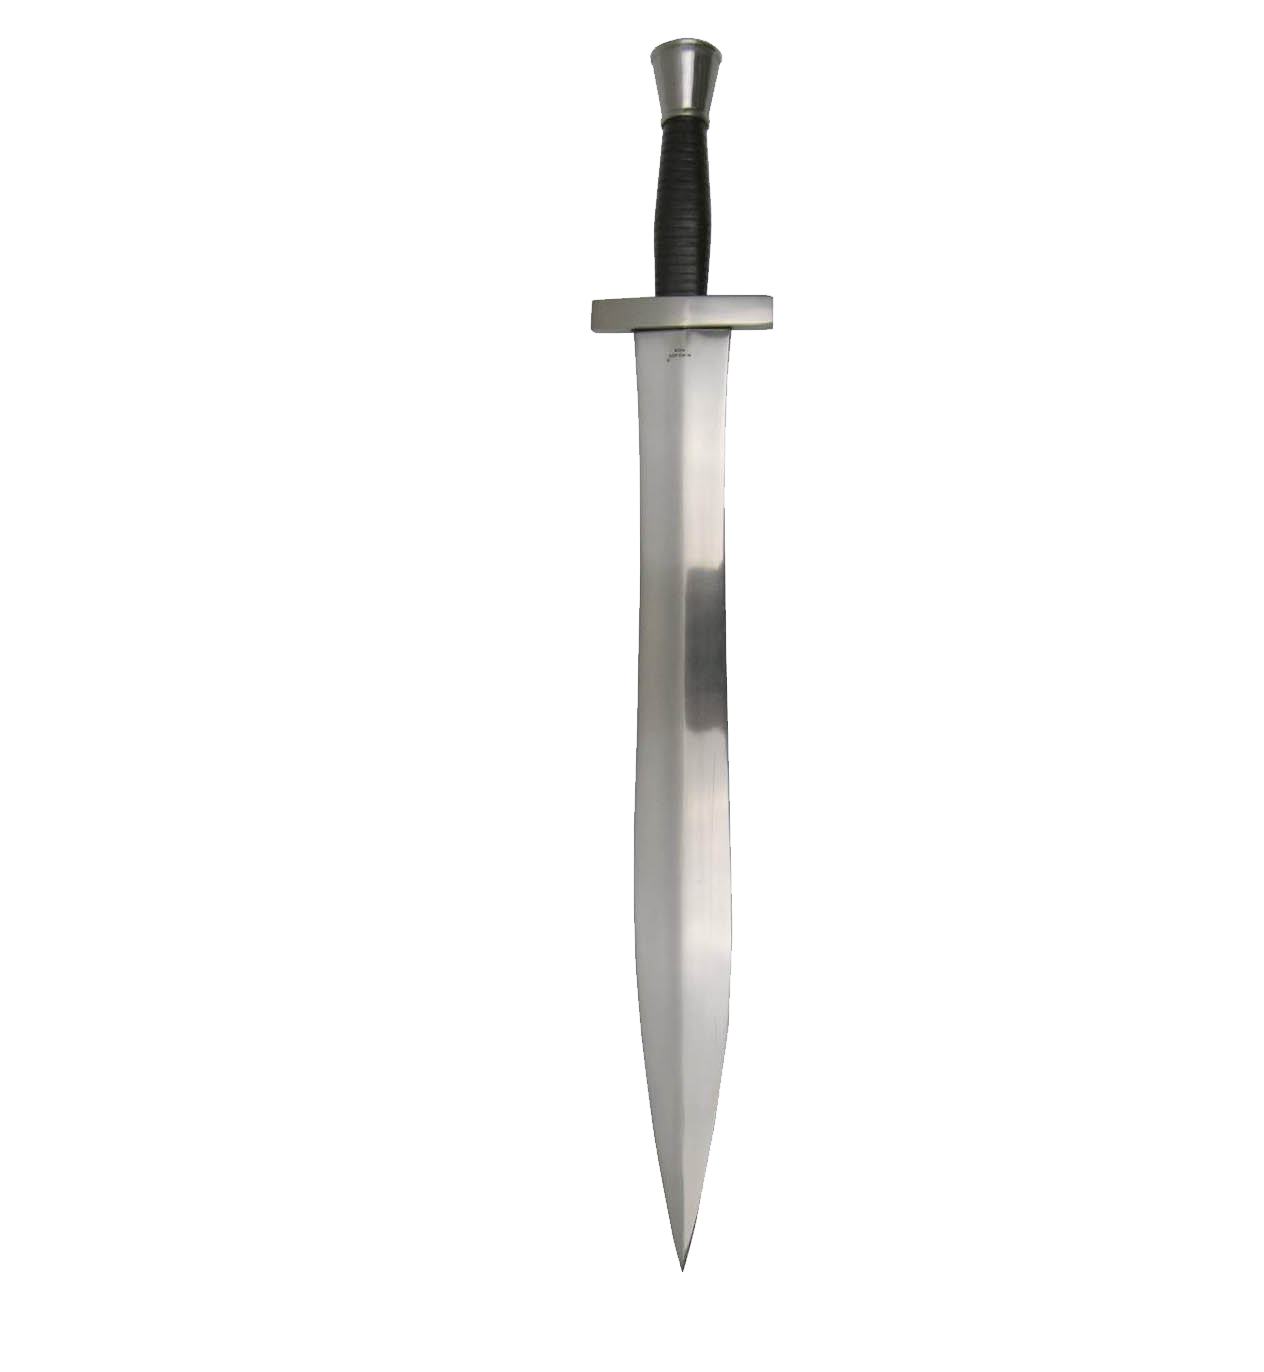 clipart designs sword